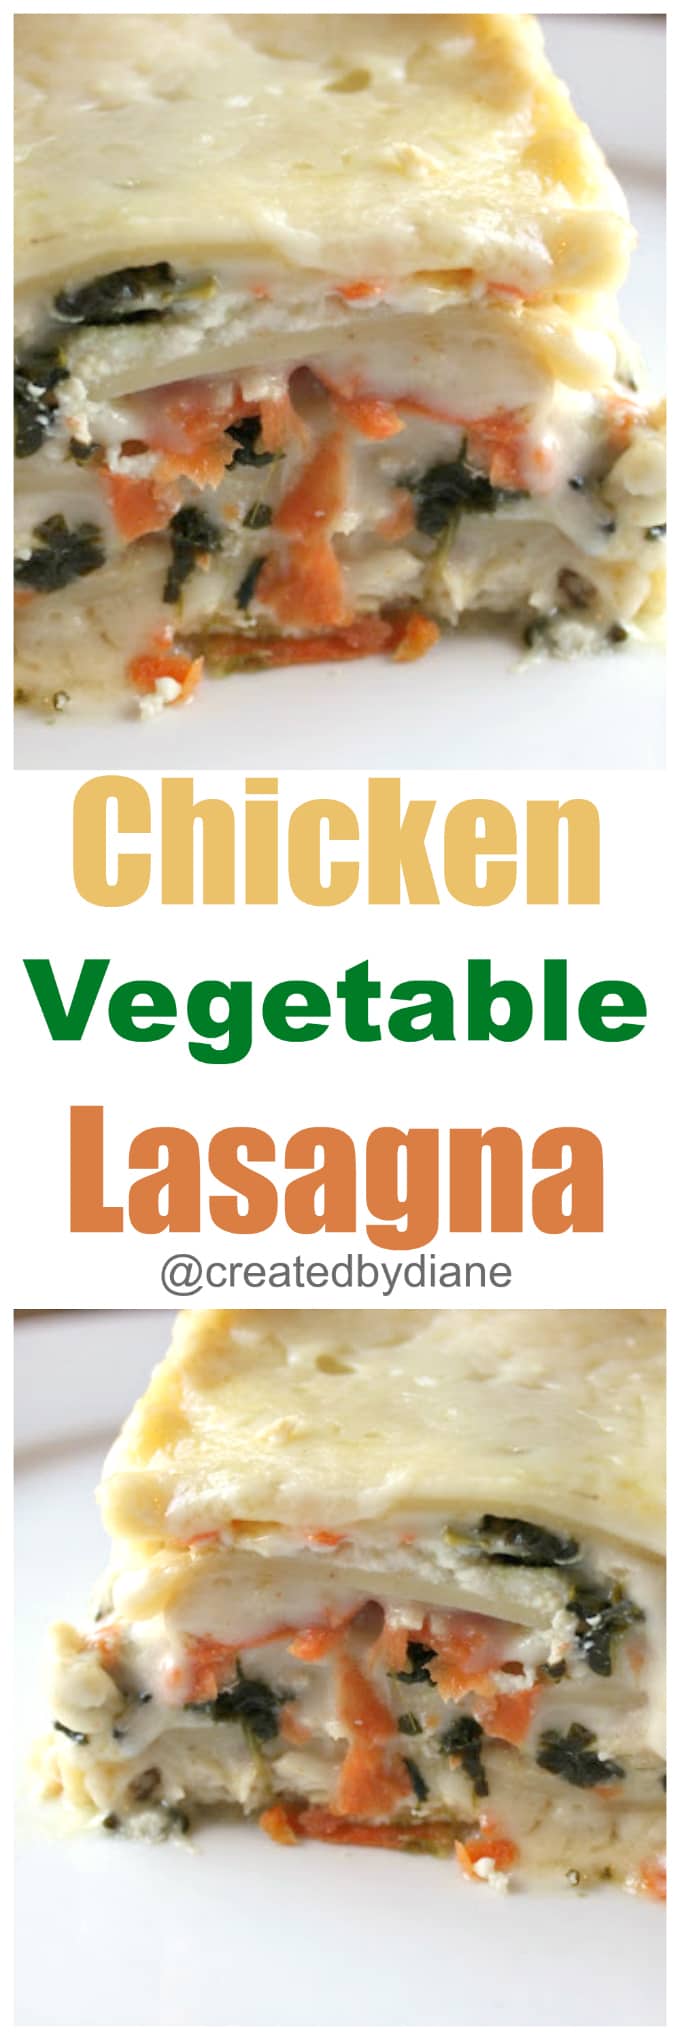 Chicken Vegetable Lasagna @createdbydiane